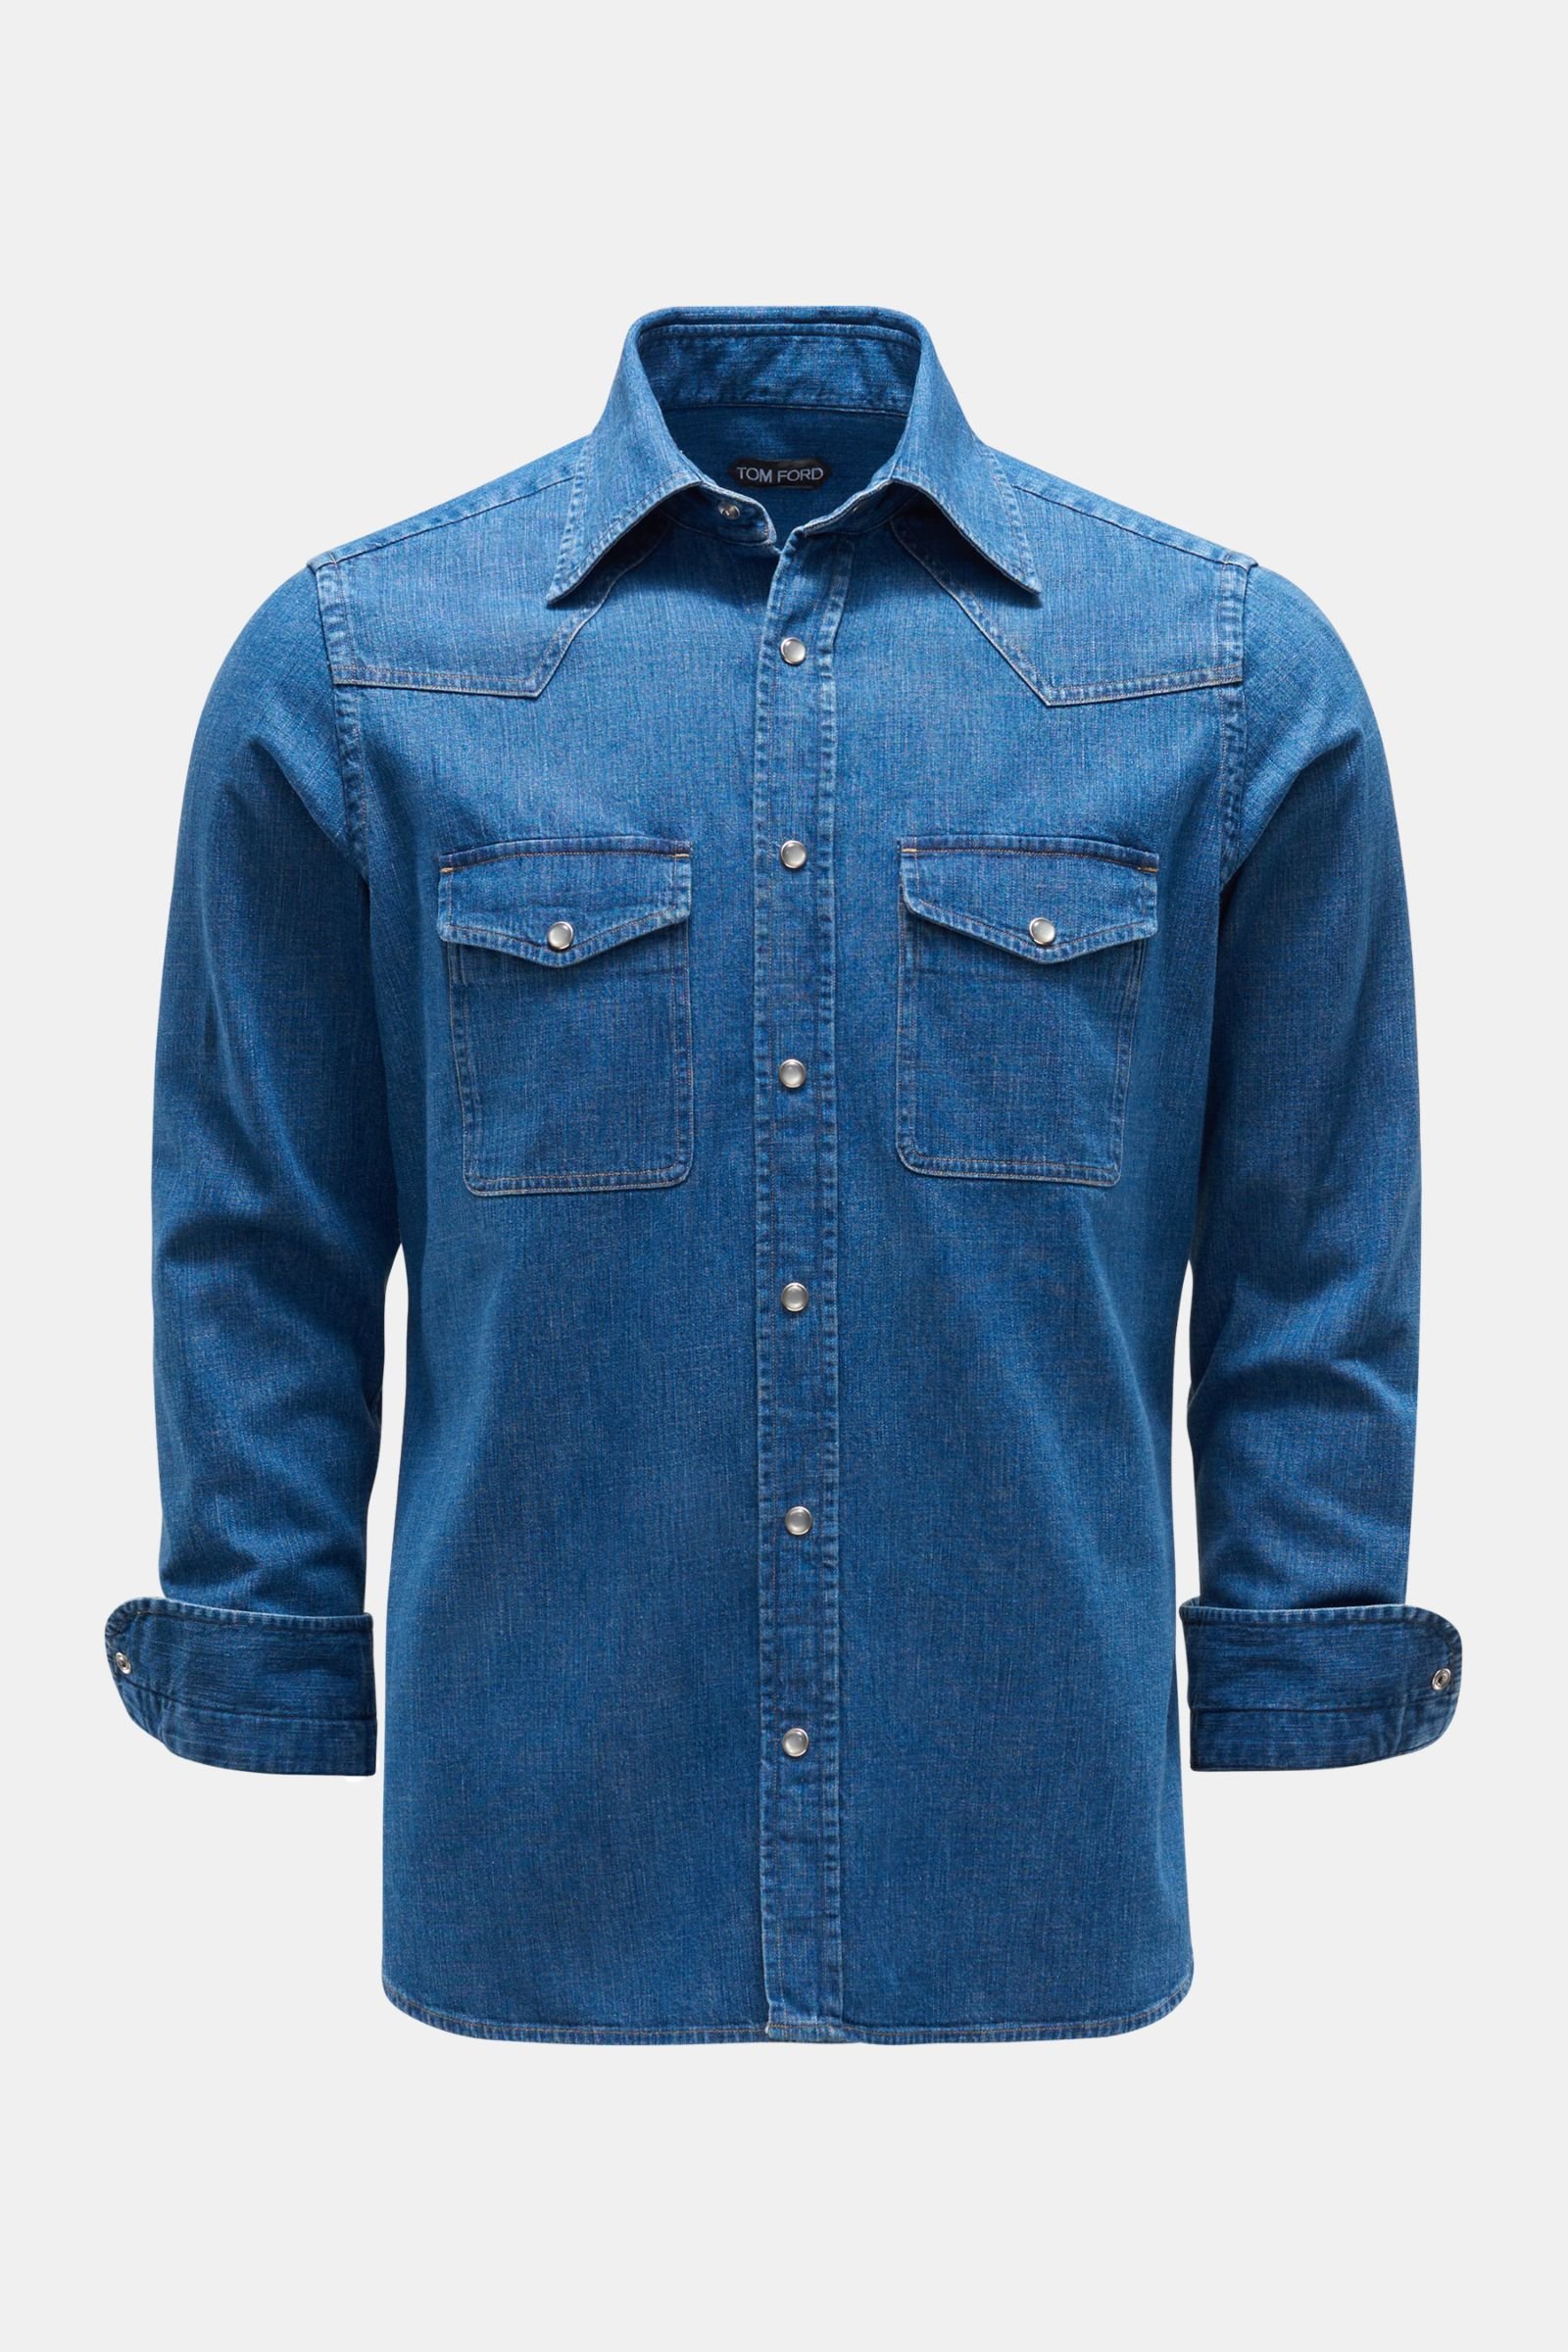 TOM FORD denim shirt Kent collar dark blue | BRAUN Hamburg